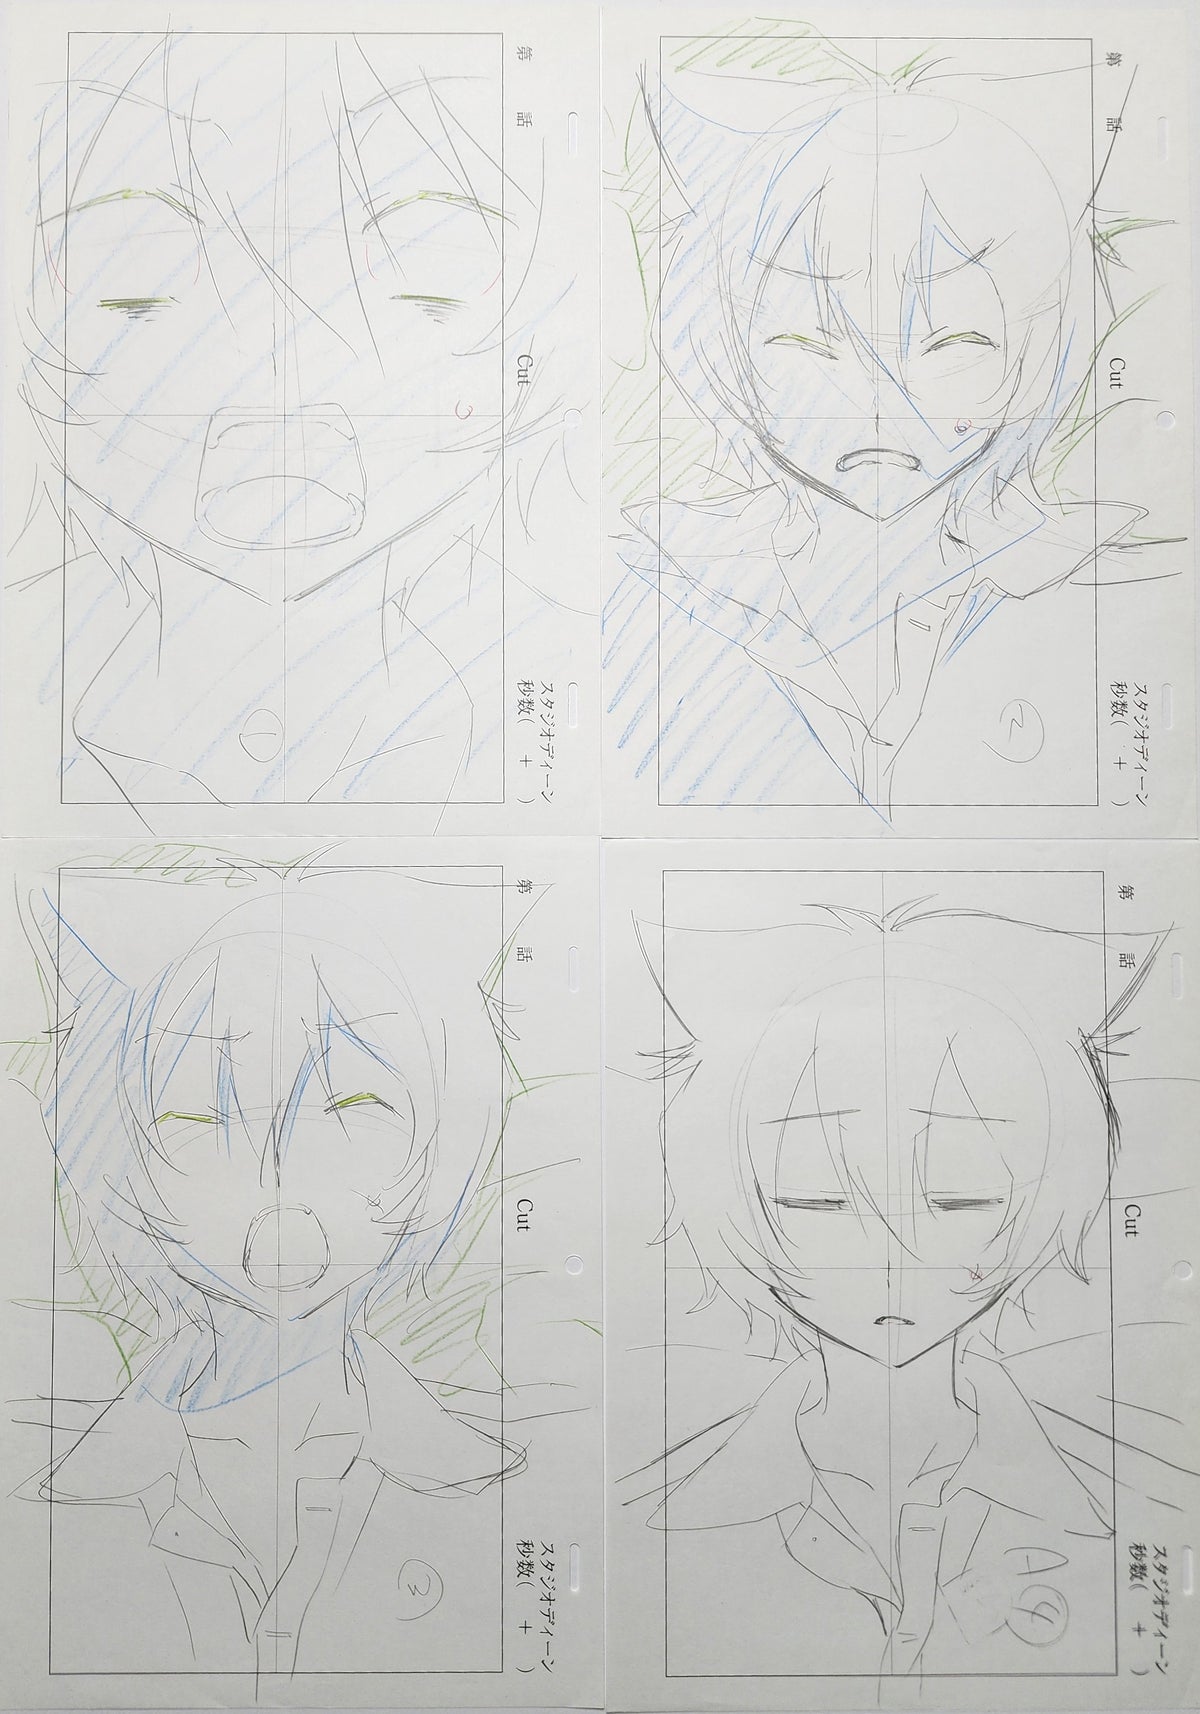 Sankarea Animation Production Cel Drawing Anime: 8 Sheets - 4373